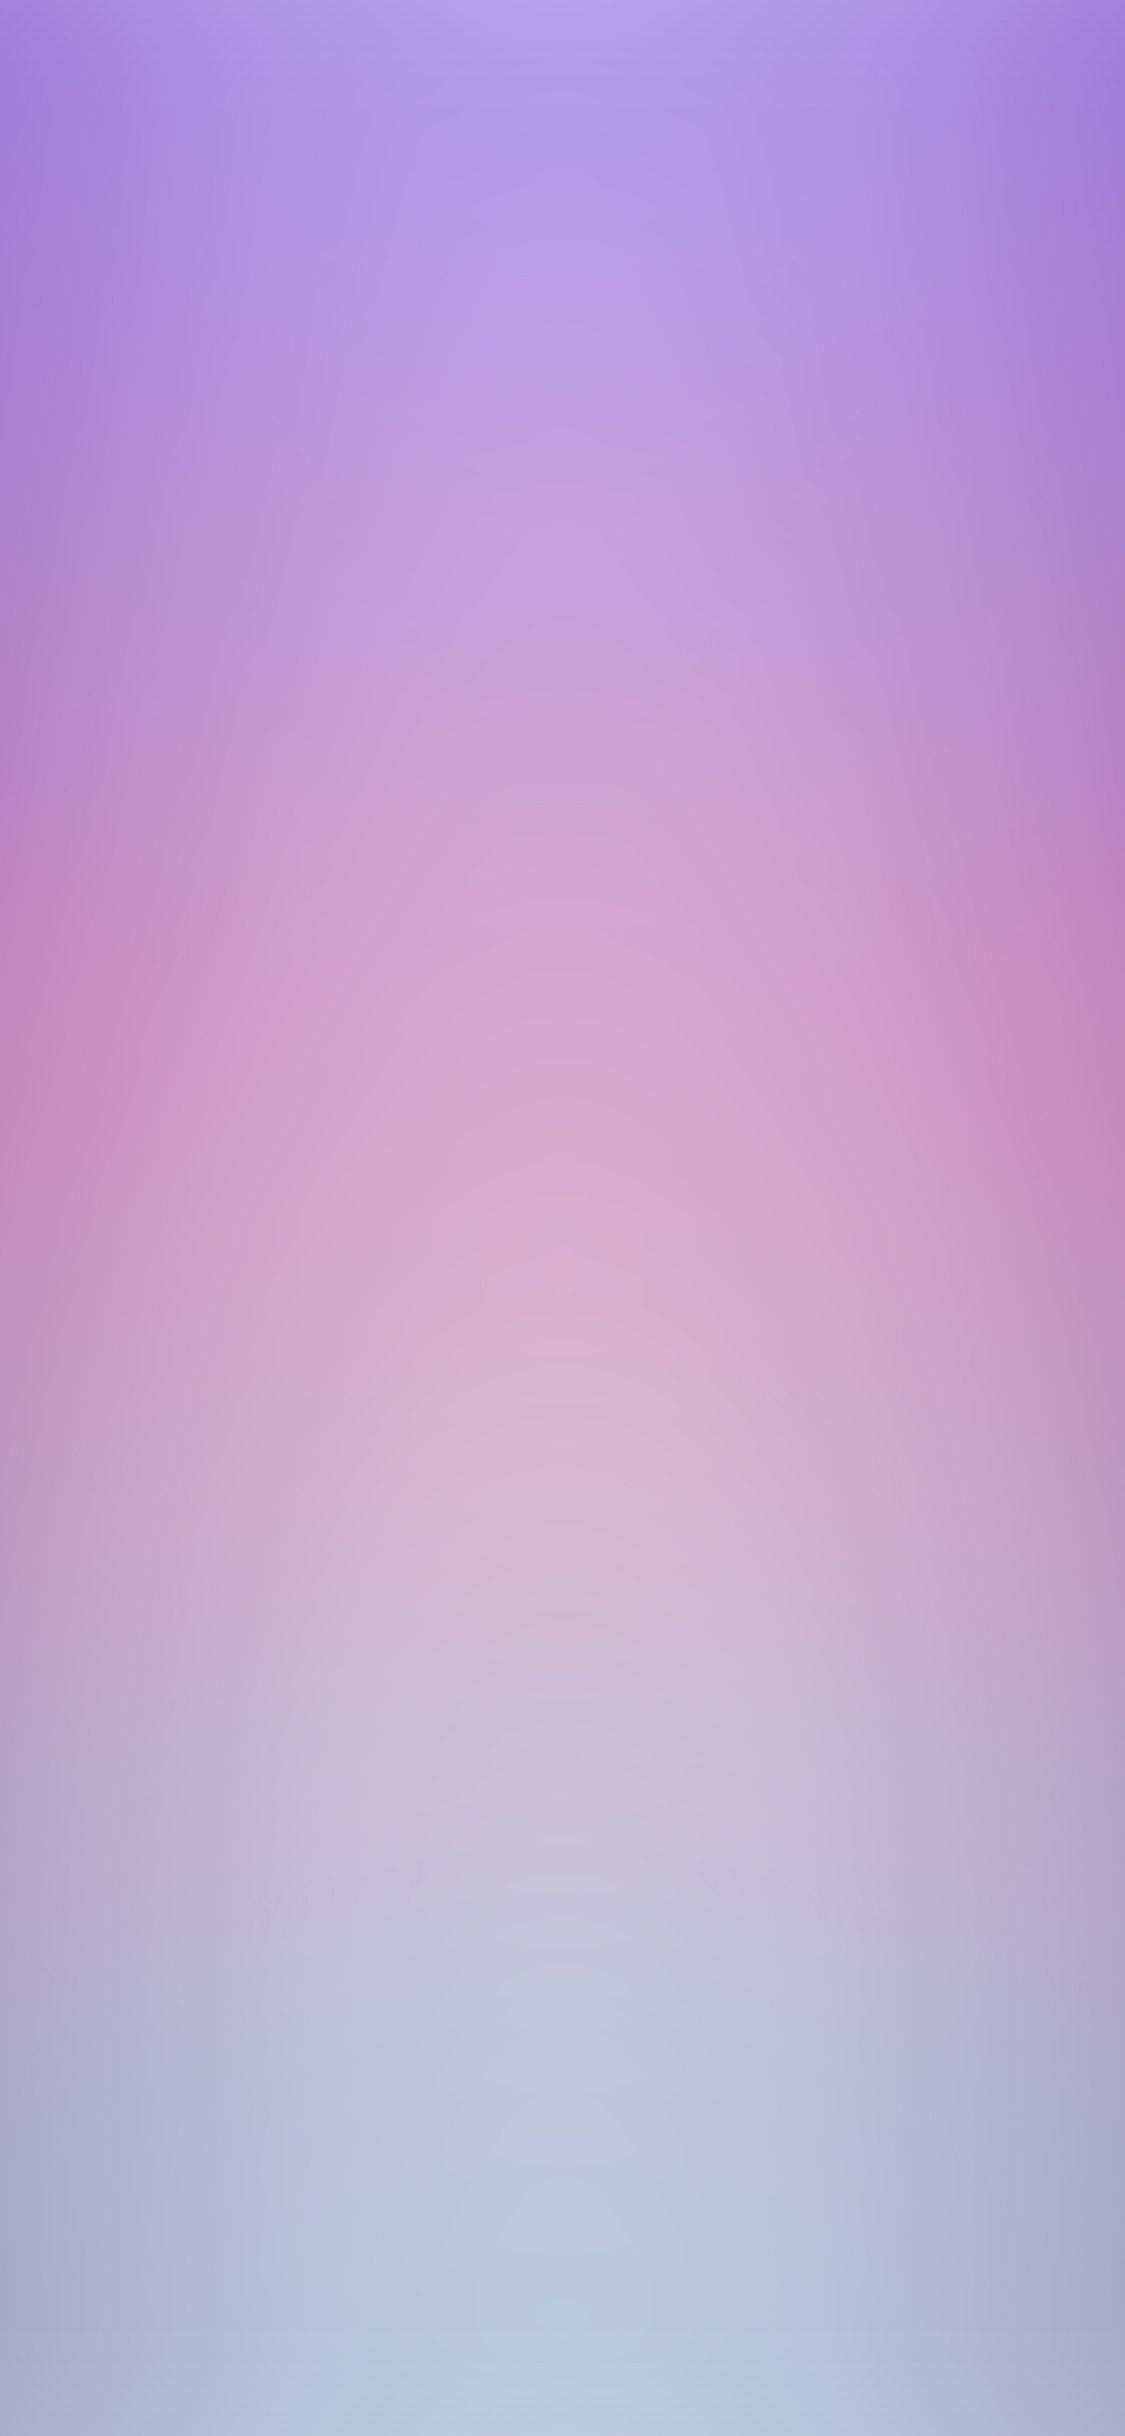 Purple Pastel iPhone Wallpapers - Top Free Purple Pastel iPhone ...